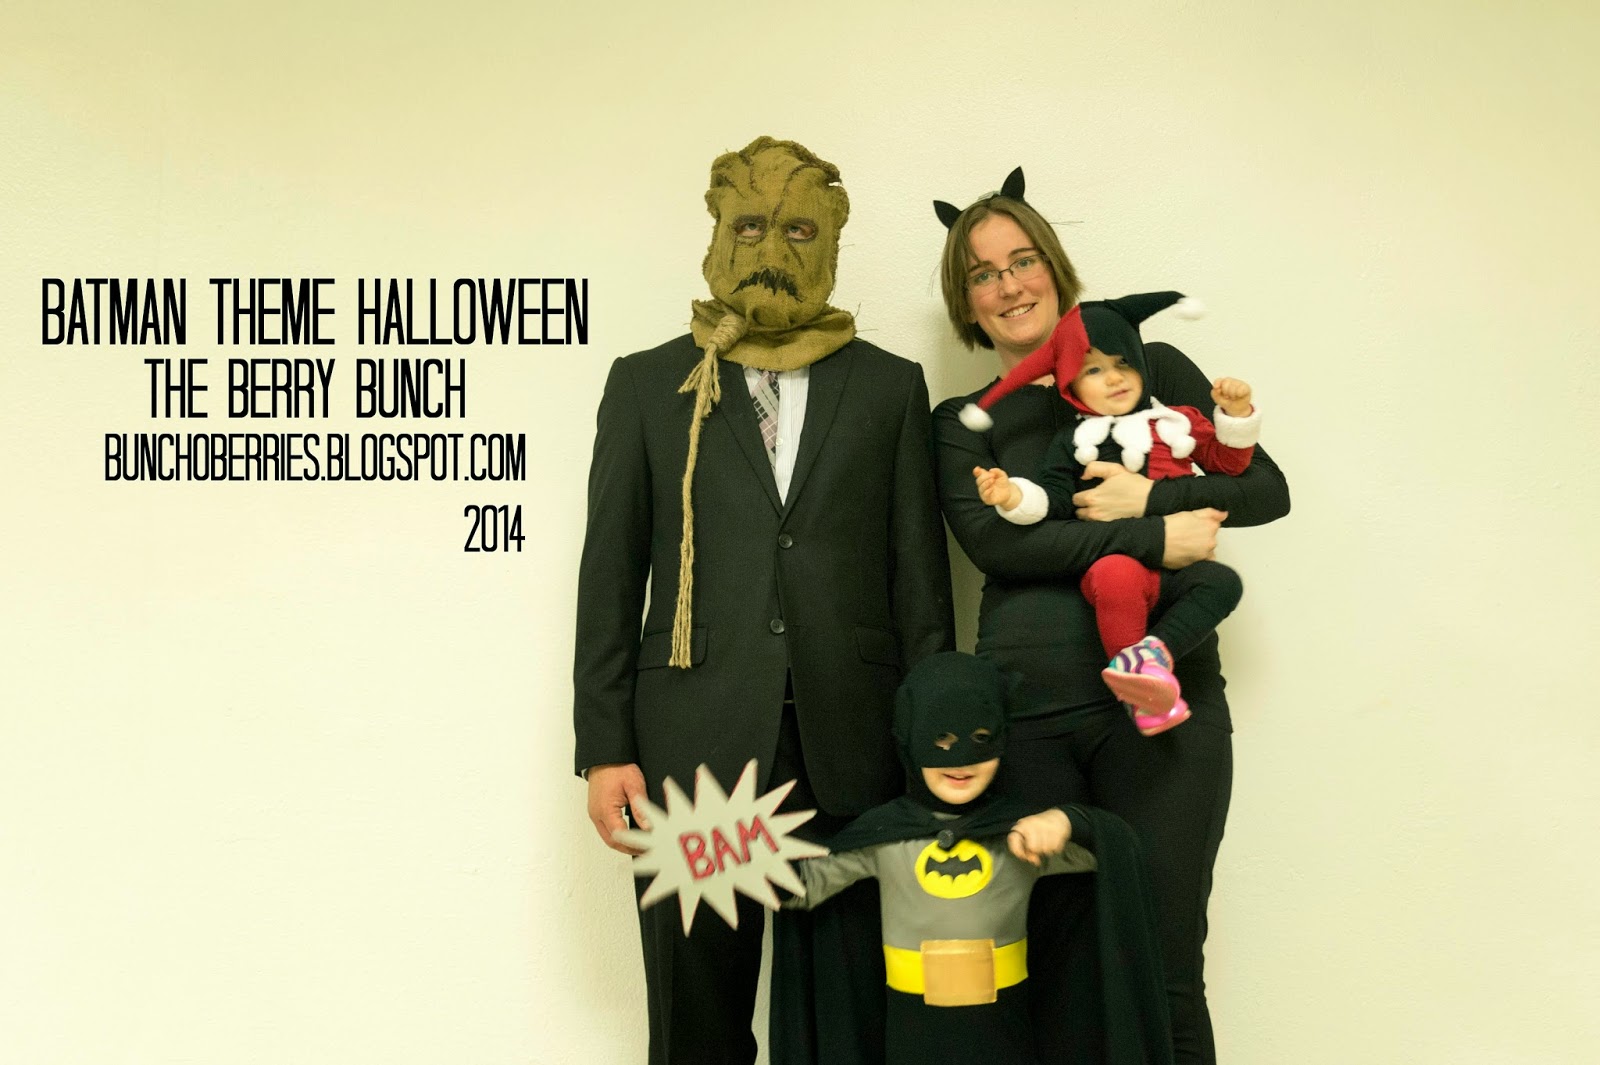 The Berry Bunch: Happy Halloween: Batman Theme Costumes